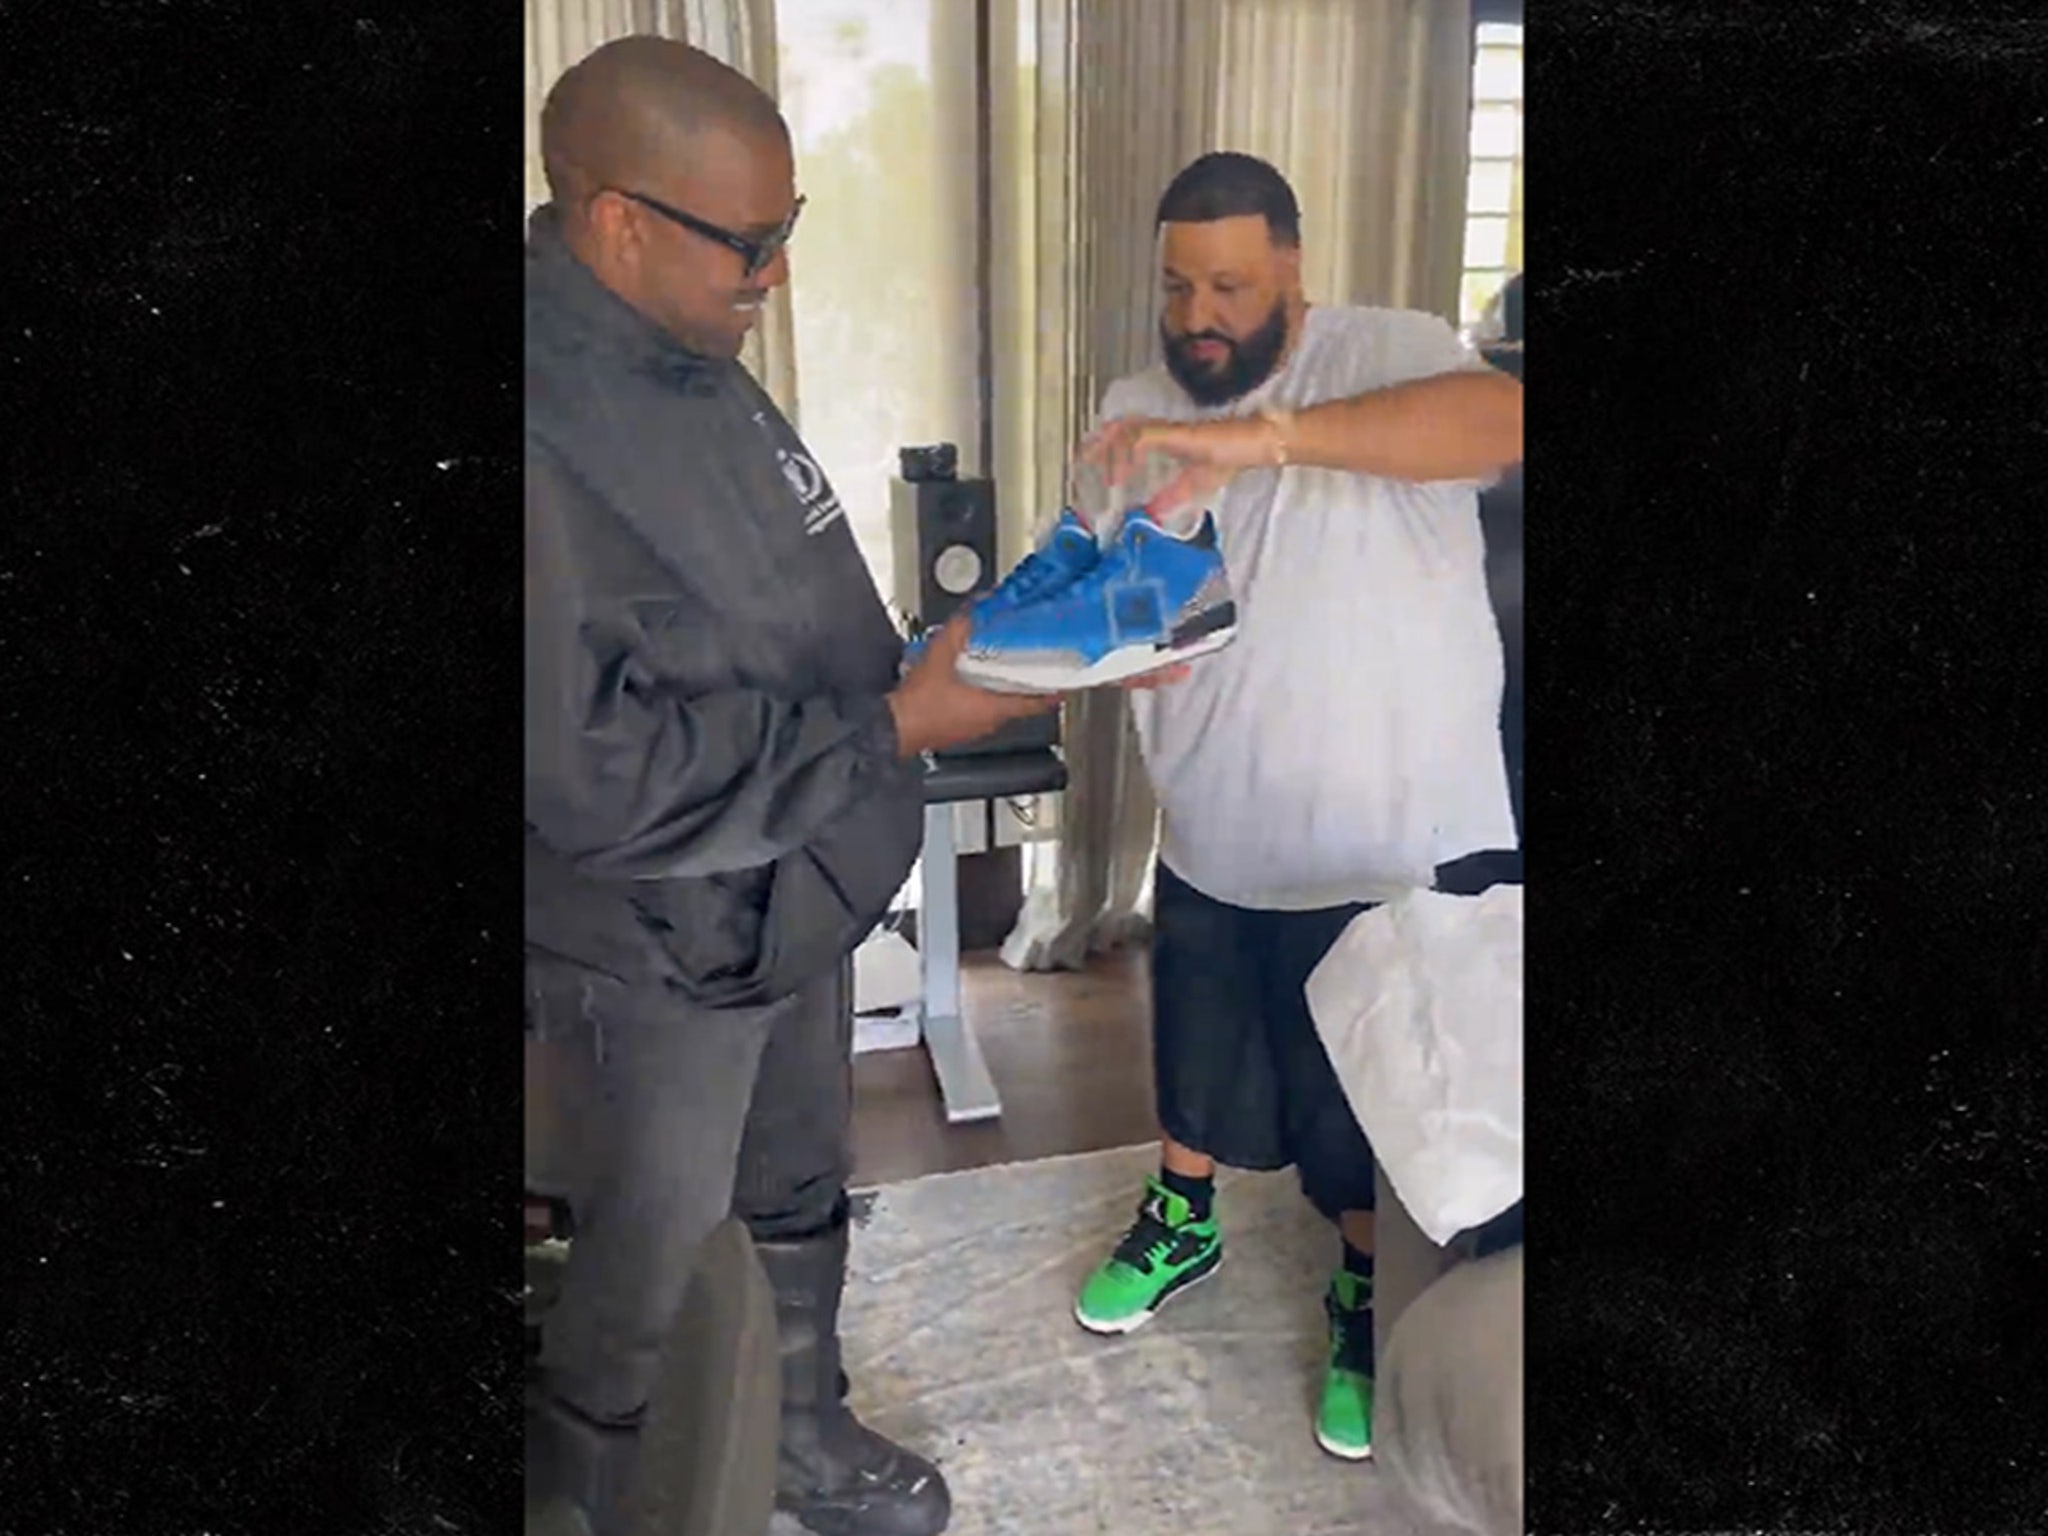 Kanye West Gifted Rare Pair of Jordan Shoes During DJ Khaled Session